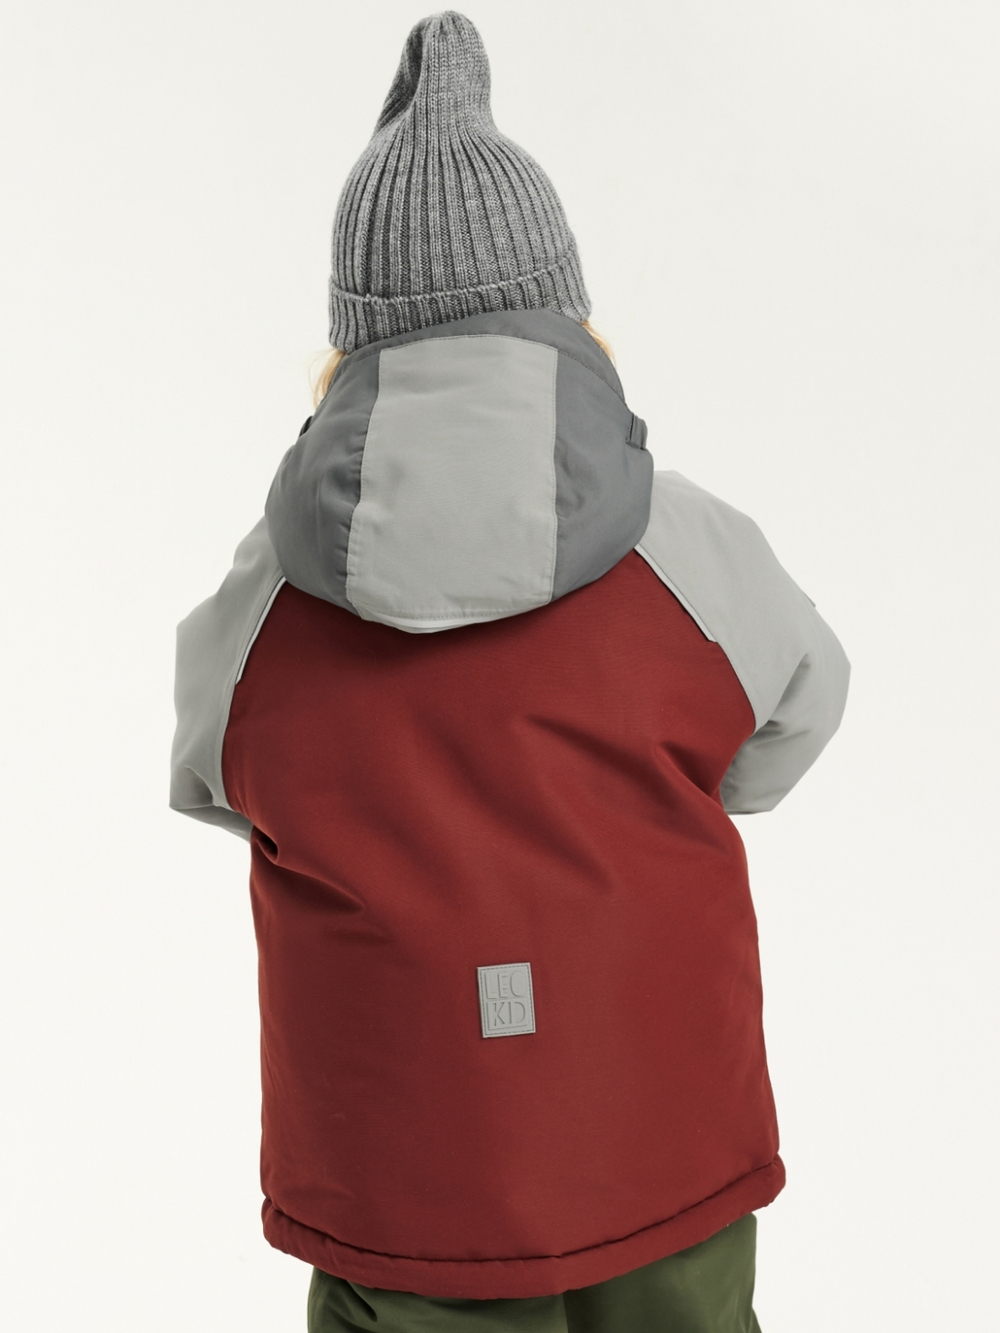 Зимняя куртка Leokid Color Block REDWOOD